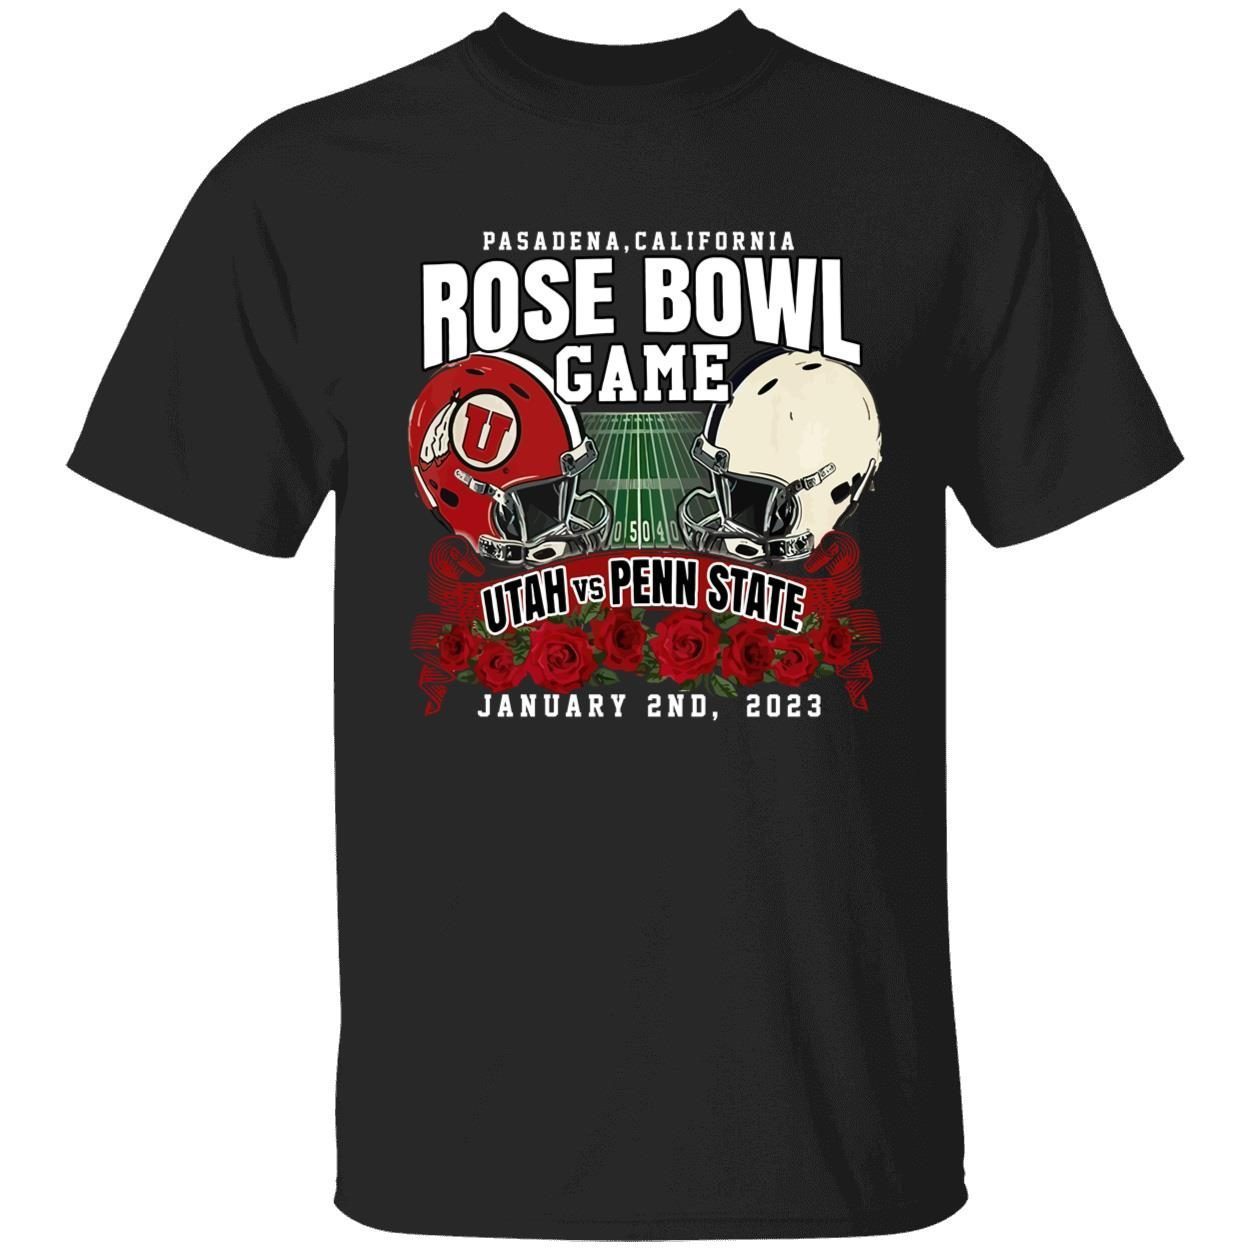 Penn state rose bowl Tee shirt ShirtElephant Office